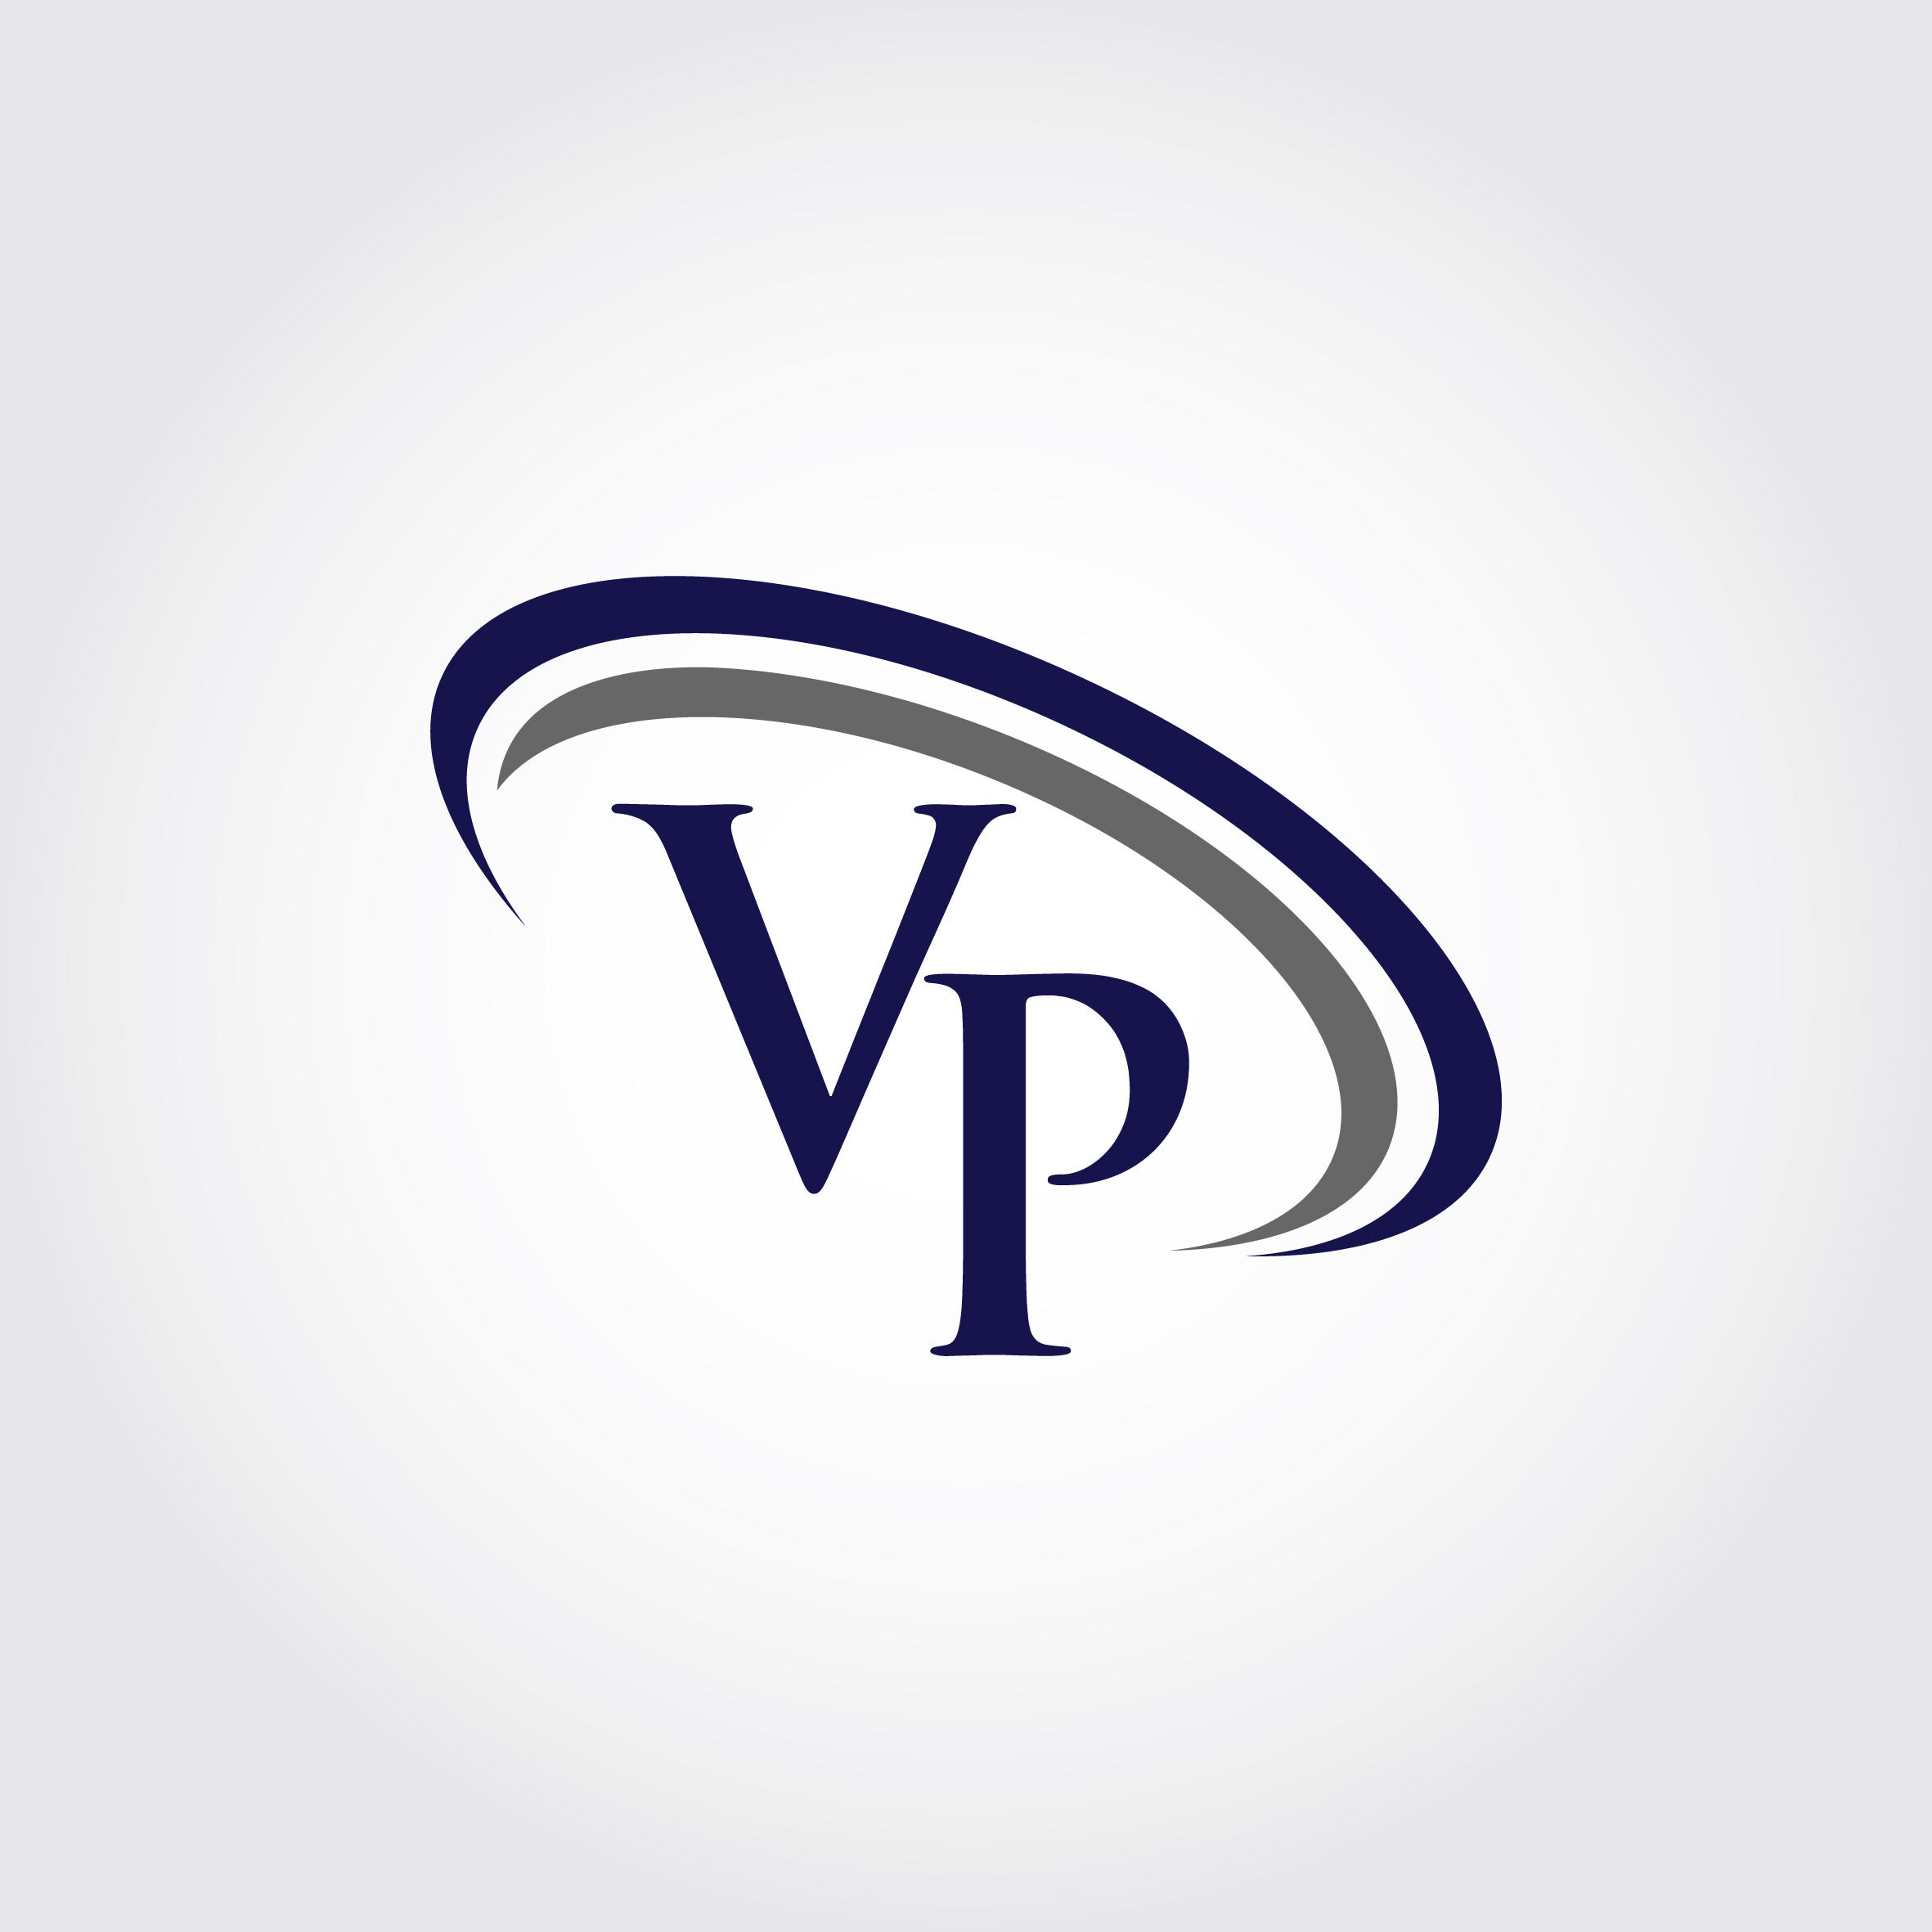 Professional Innovative Initial Vp Logo And Pv Logo Letter Vp Or Pv Minimal  Elegant Monogram Premium Business Artistic Alphabet Symbol And Sign Stock  Illustration - Download Image Now - iStock